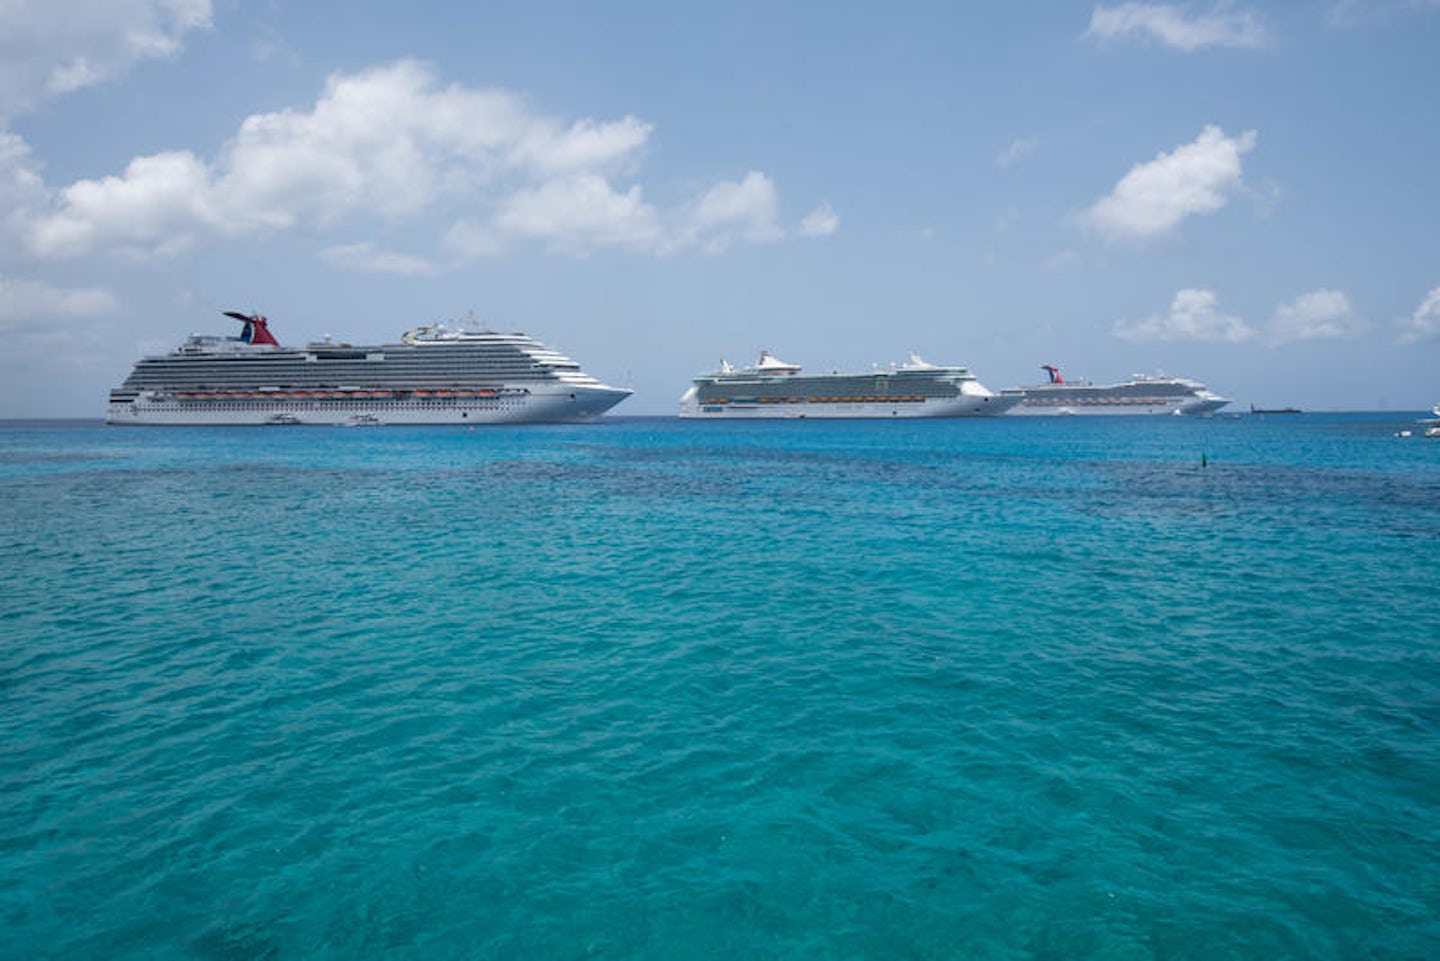 Cruise ships in the Caribbean (Photo: Cruise Critic)